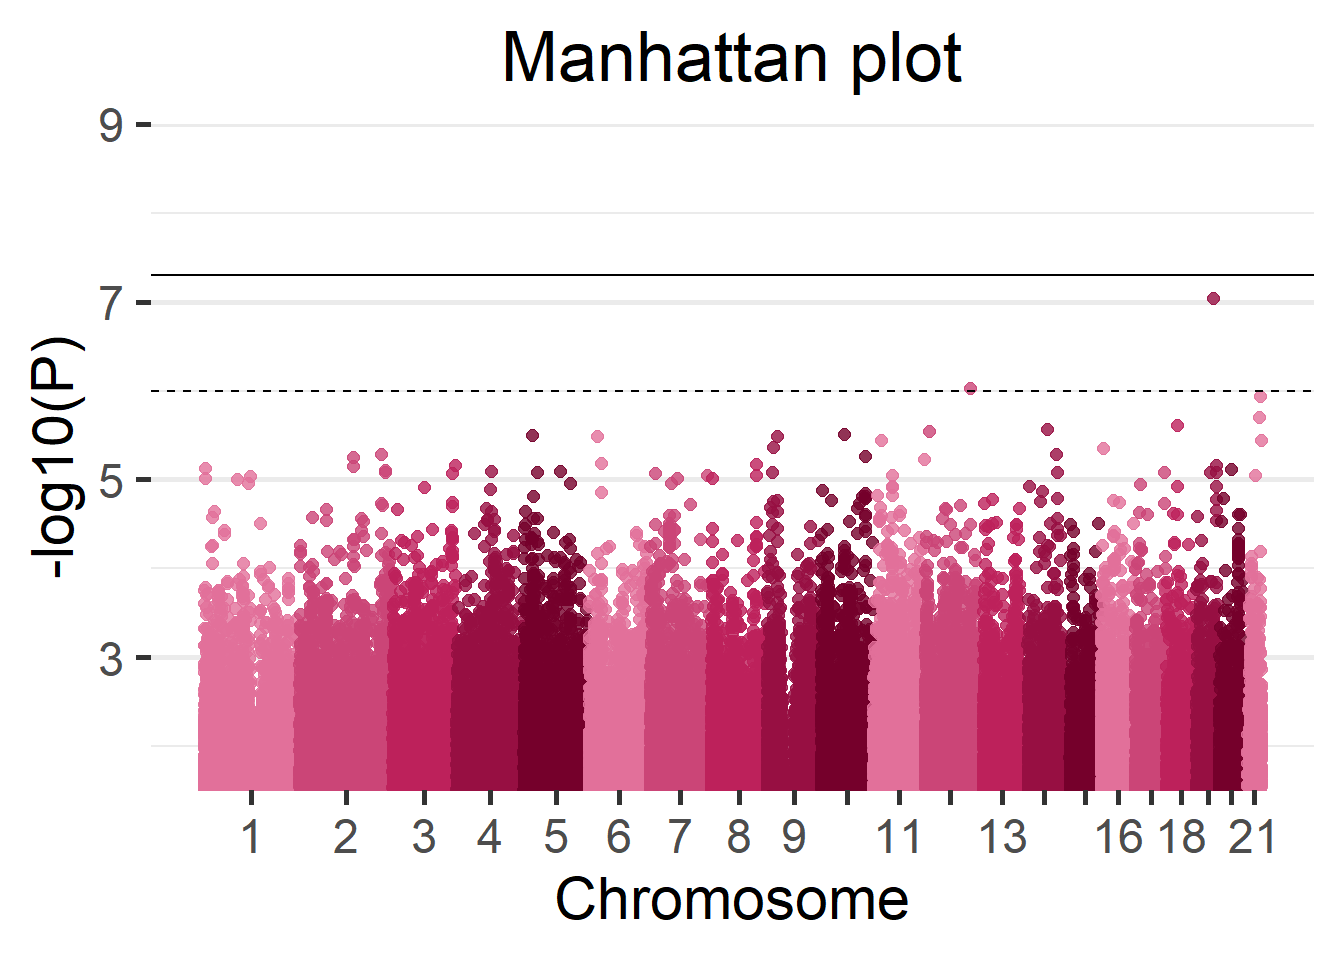 Manhattan plot of the complete data.